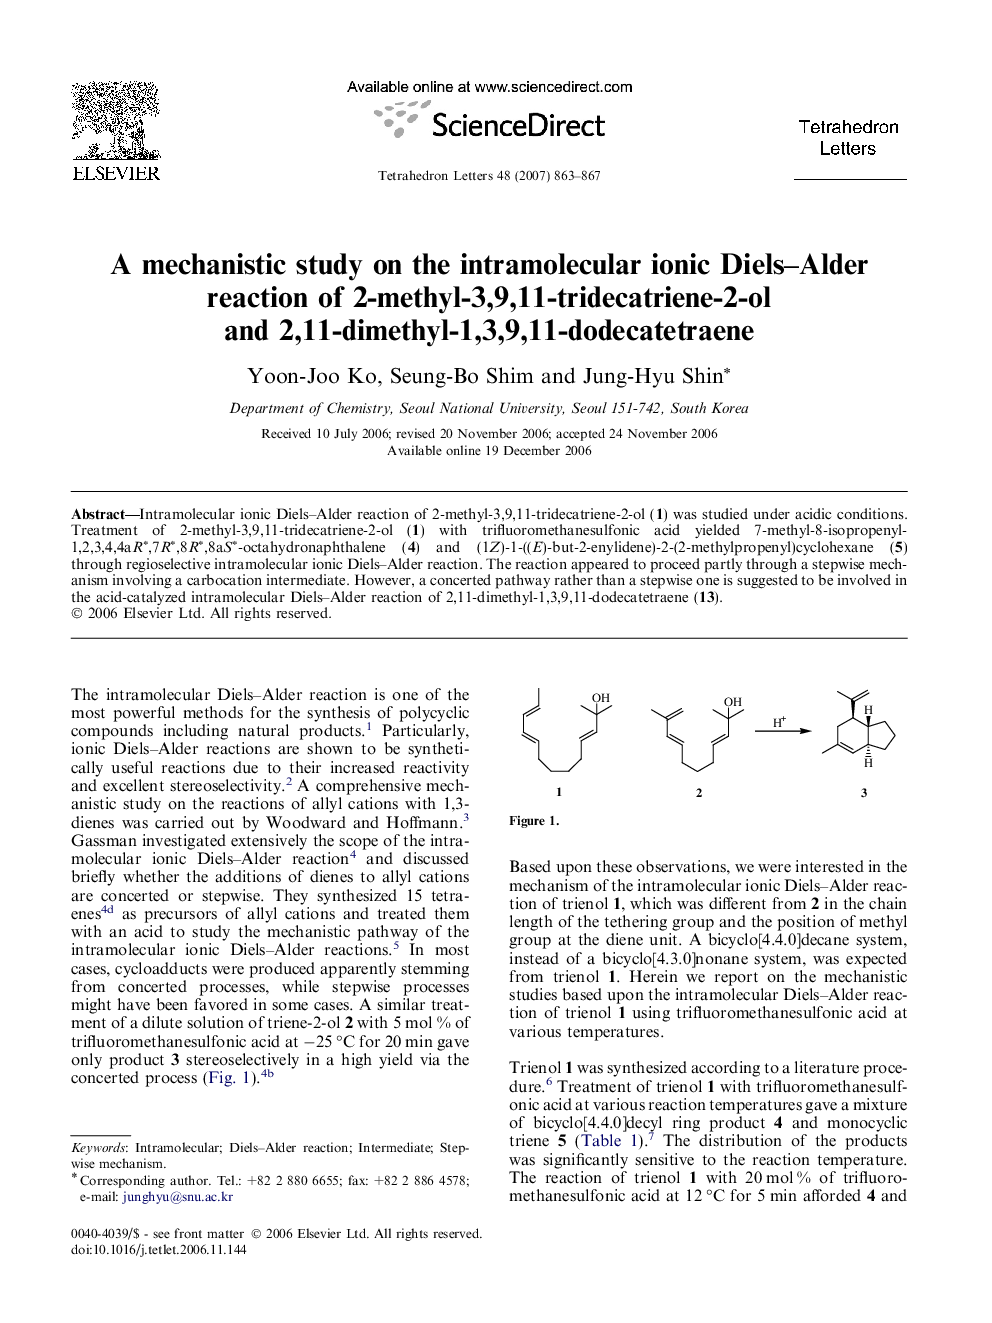 A mechanistic study on the intramolecular ionic Diels-Alder reaction of 2-methyl-3,9,11-tridecatriene-2-ol and 2,11-dimethyl-1,3,9,11-dodecatetraene